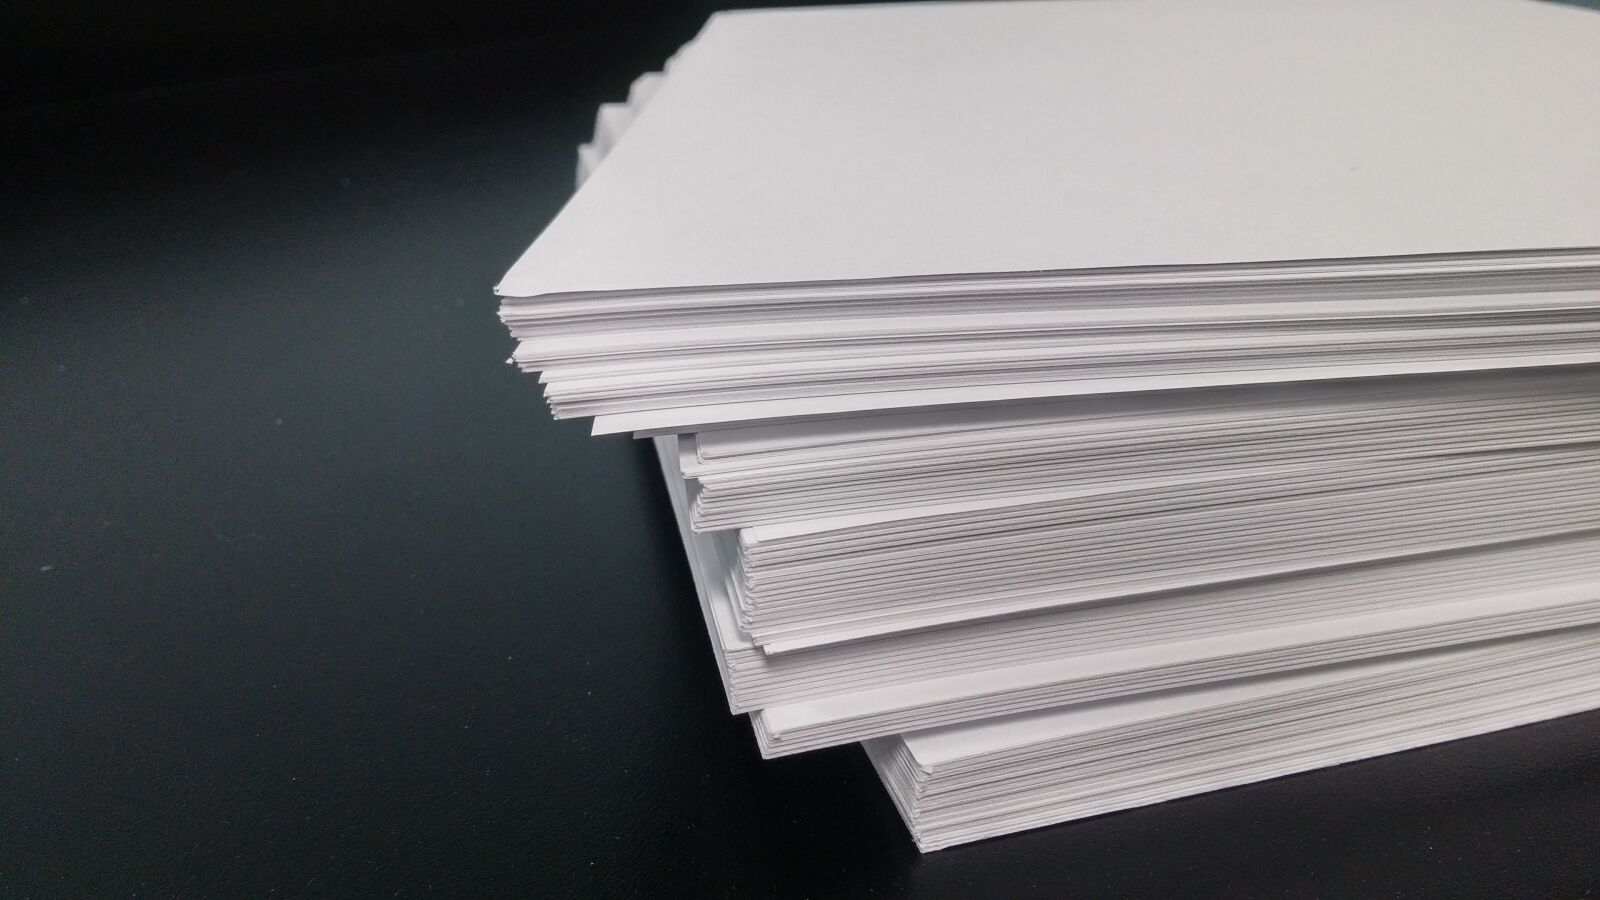 LG G3 sample photo. Paper, stack, printer photography